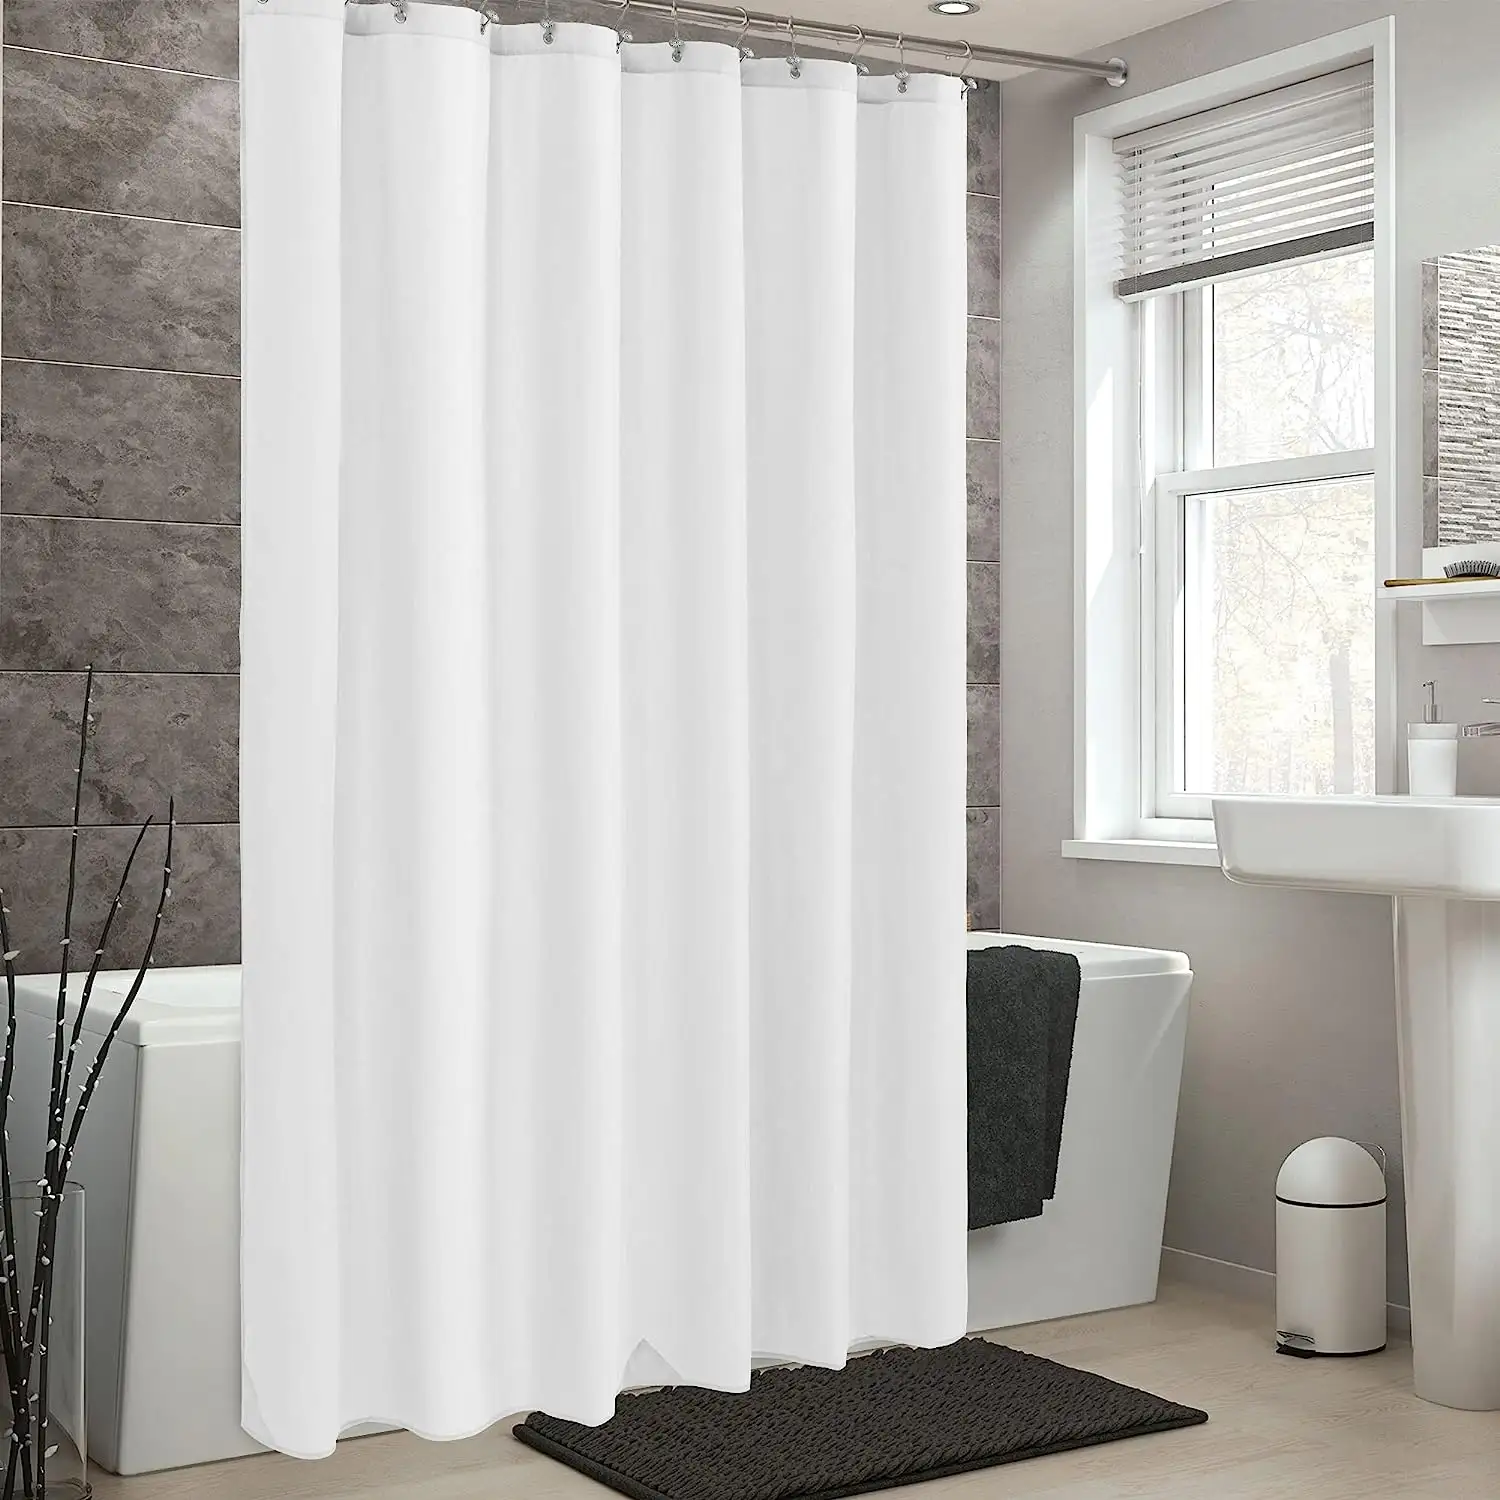 Cortina de ducha de poliéster blanco impermeable, forro de Hotel suave, luz y tela lavable a máquina, cortina de ducha 72x72